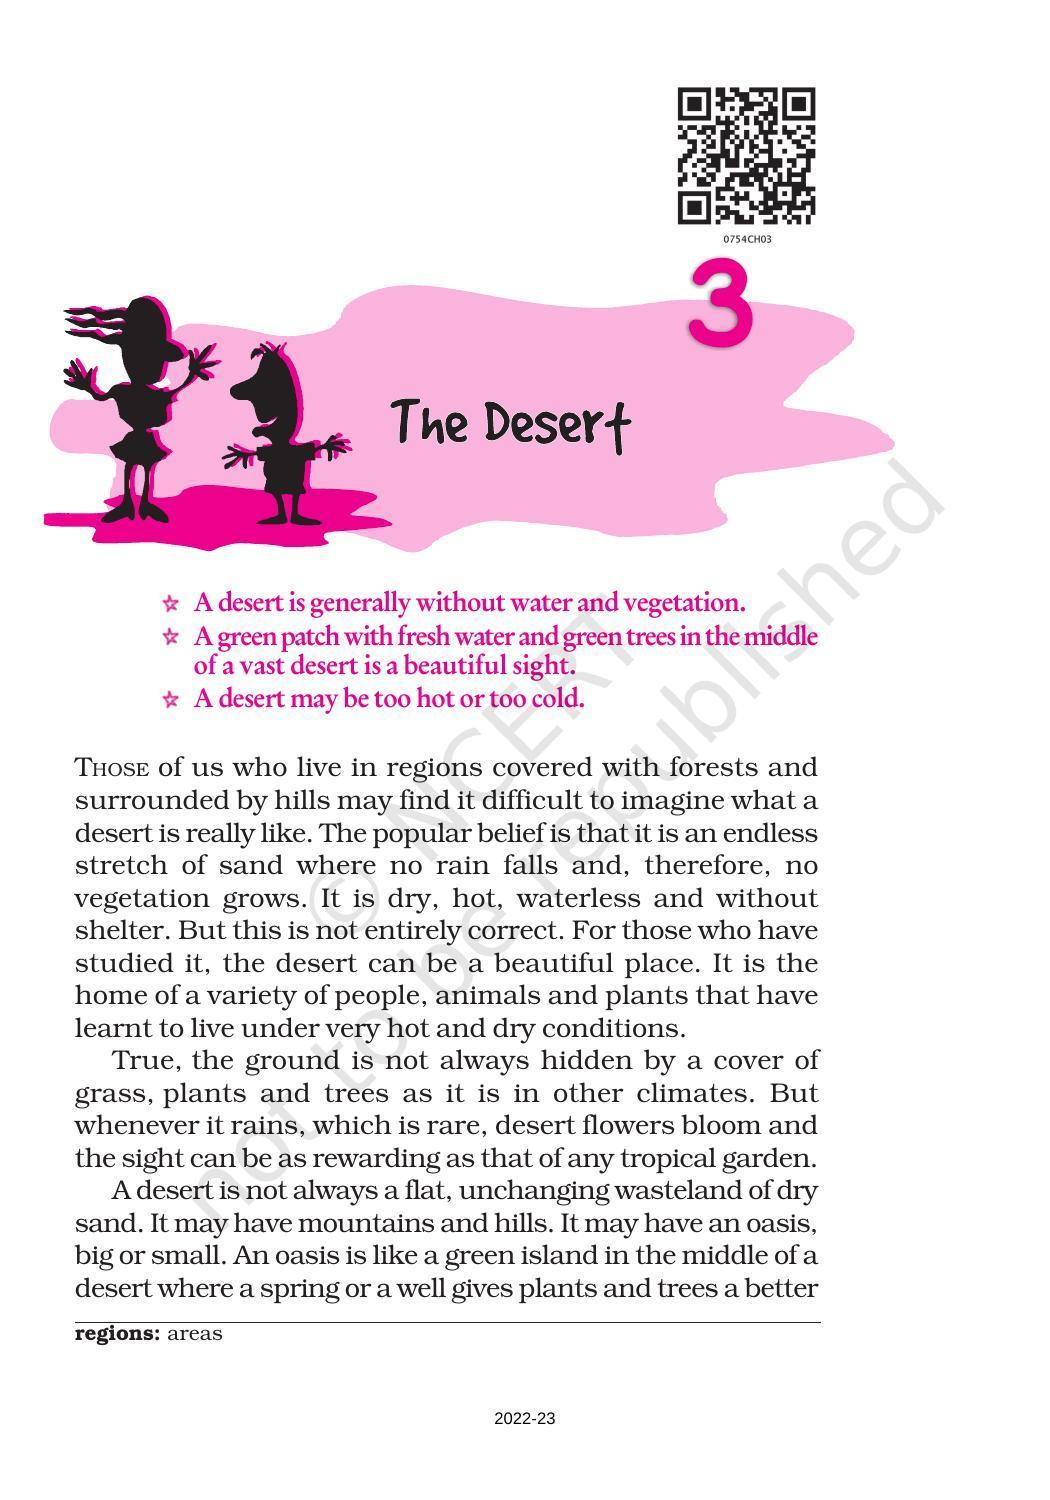 NCERT Book for Class 7 English (An Alien Hand): Chapter 3-The Desert - Page 1